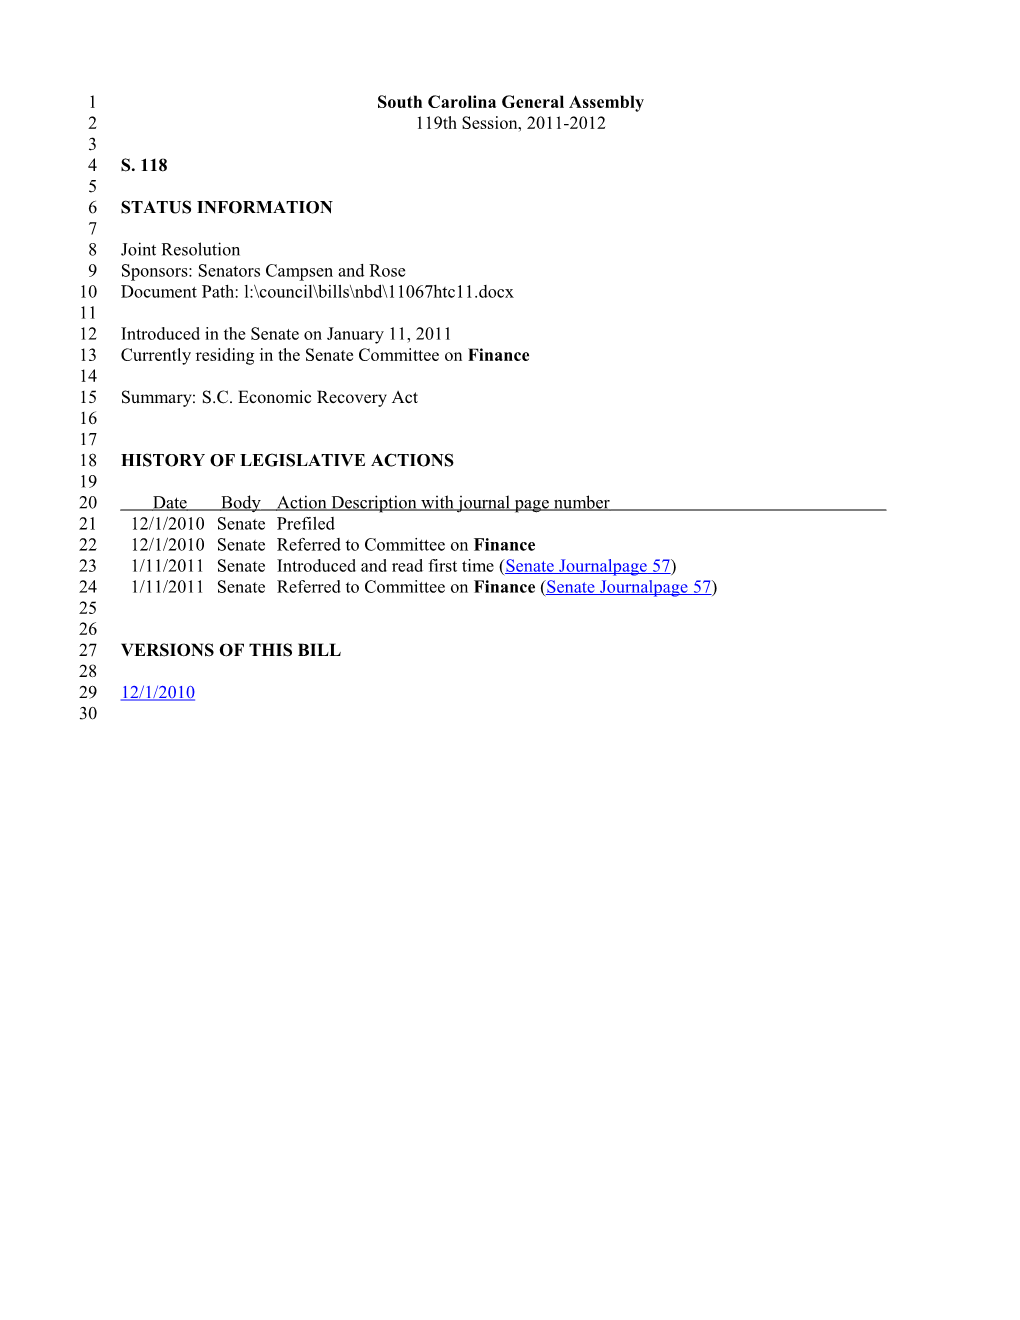 2011-2012 Bill 118: S.C. Economic Recovery Act - South Carolina Legislature Online